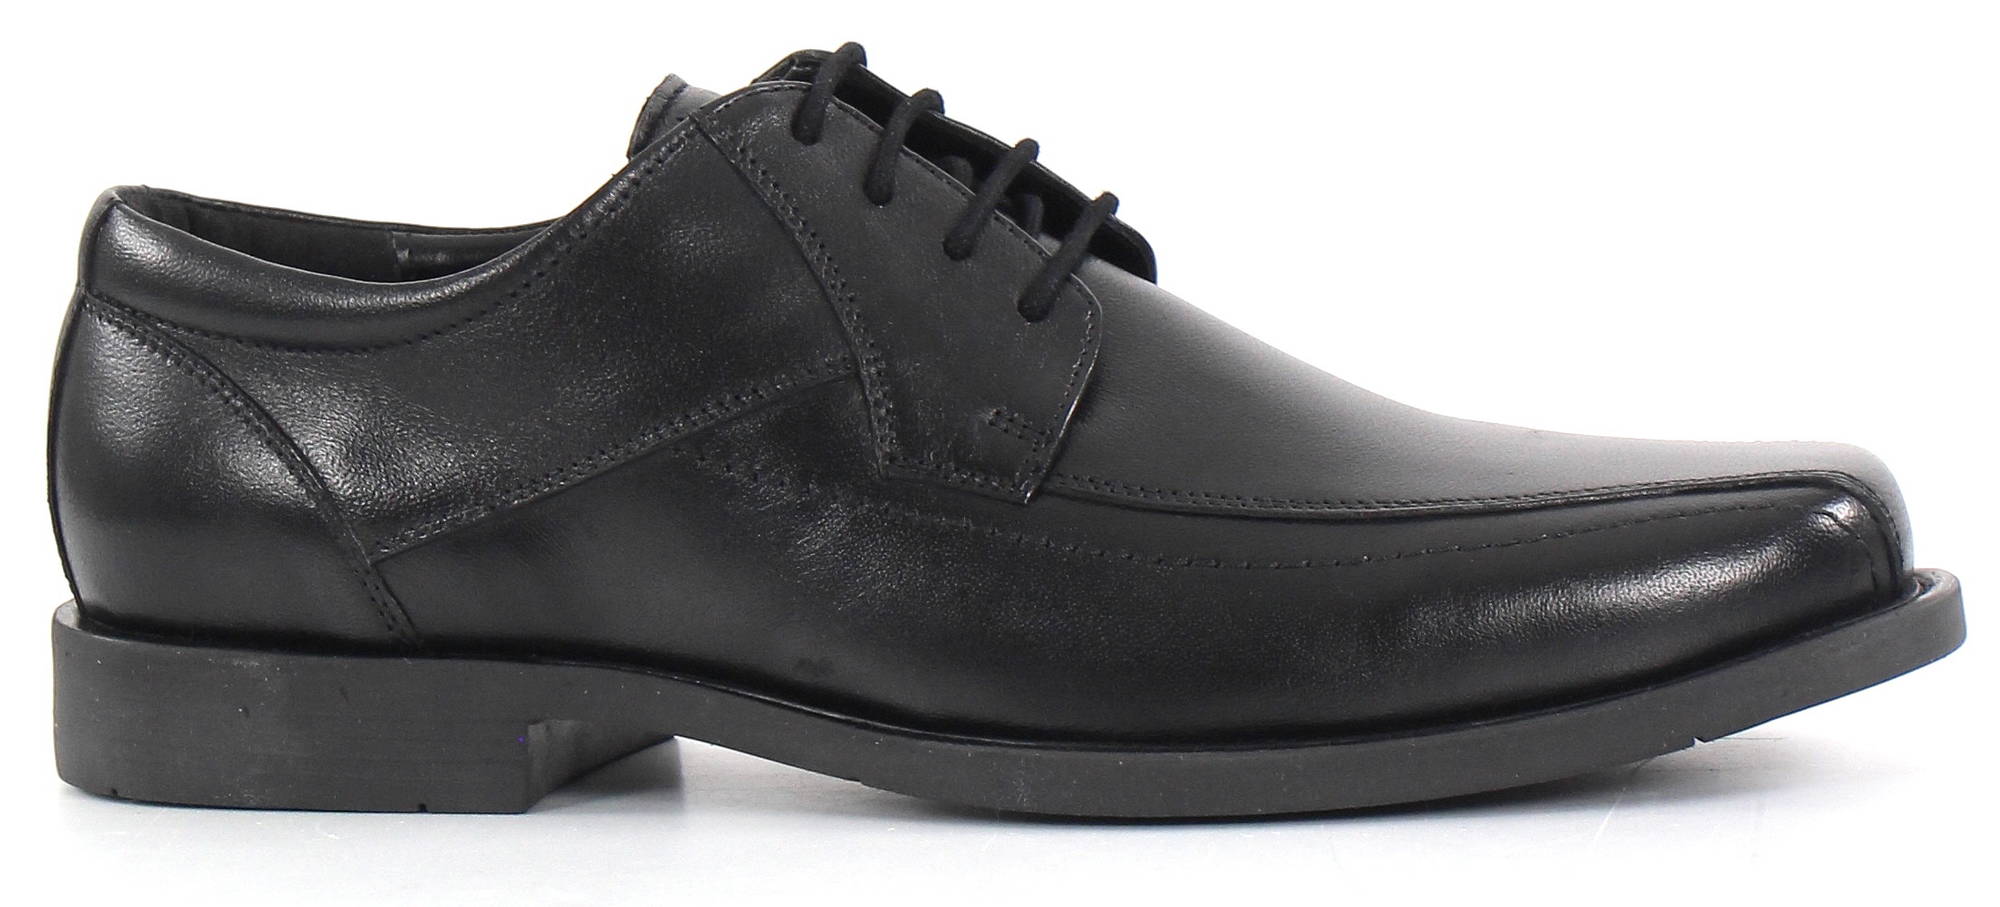 Senator Dress Shoes 451-0658, Black - Stilettoshop.eu webstore